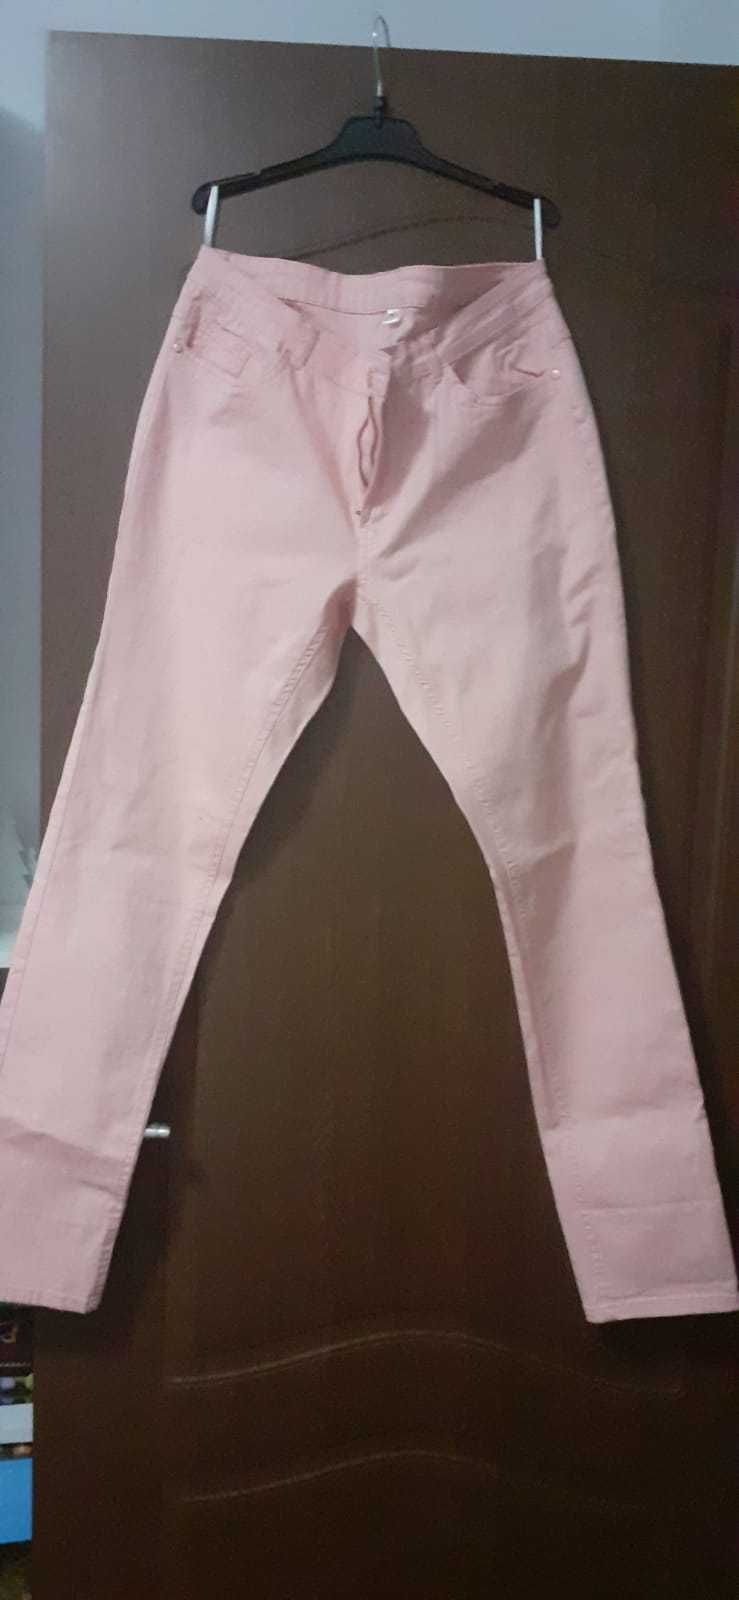 Vand pantaloni noi de dama roz elastici